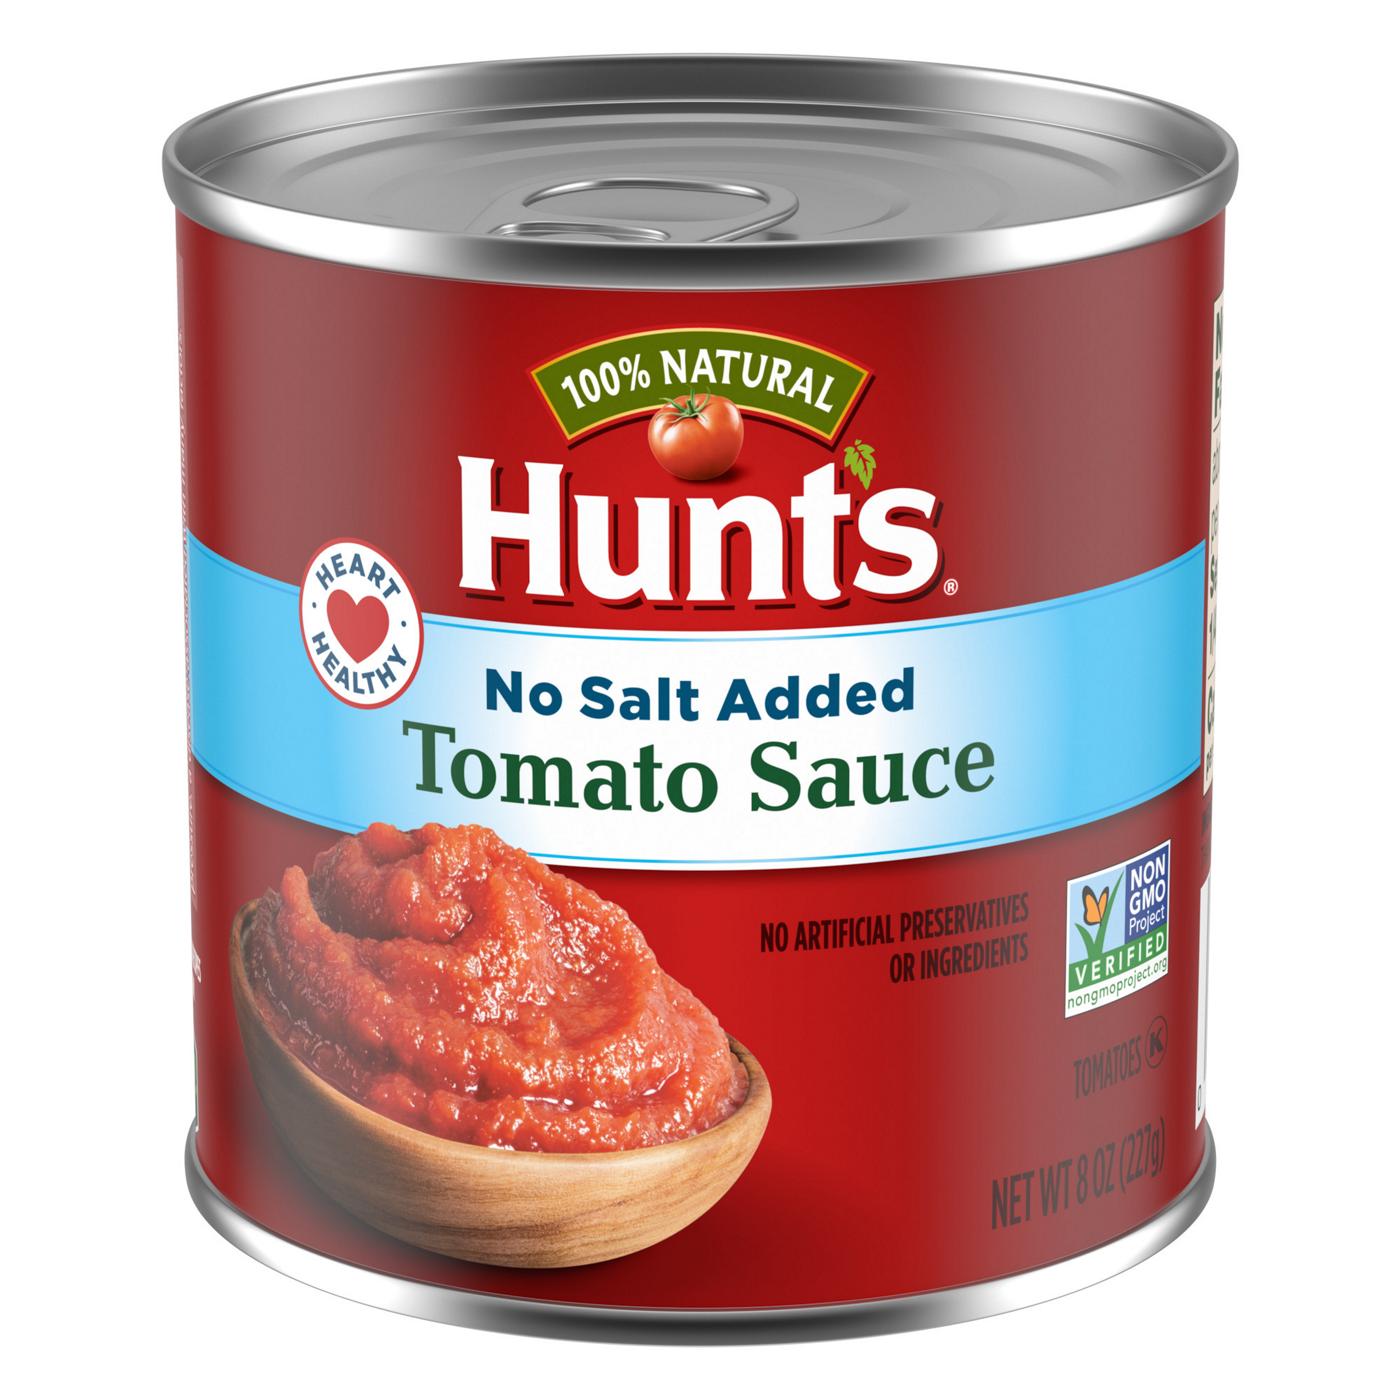 Hunt's Tomato Sauce No Salt Added; image 1 of 7